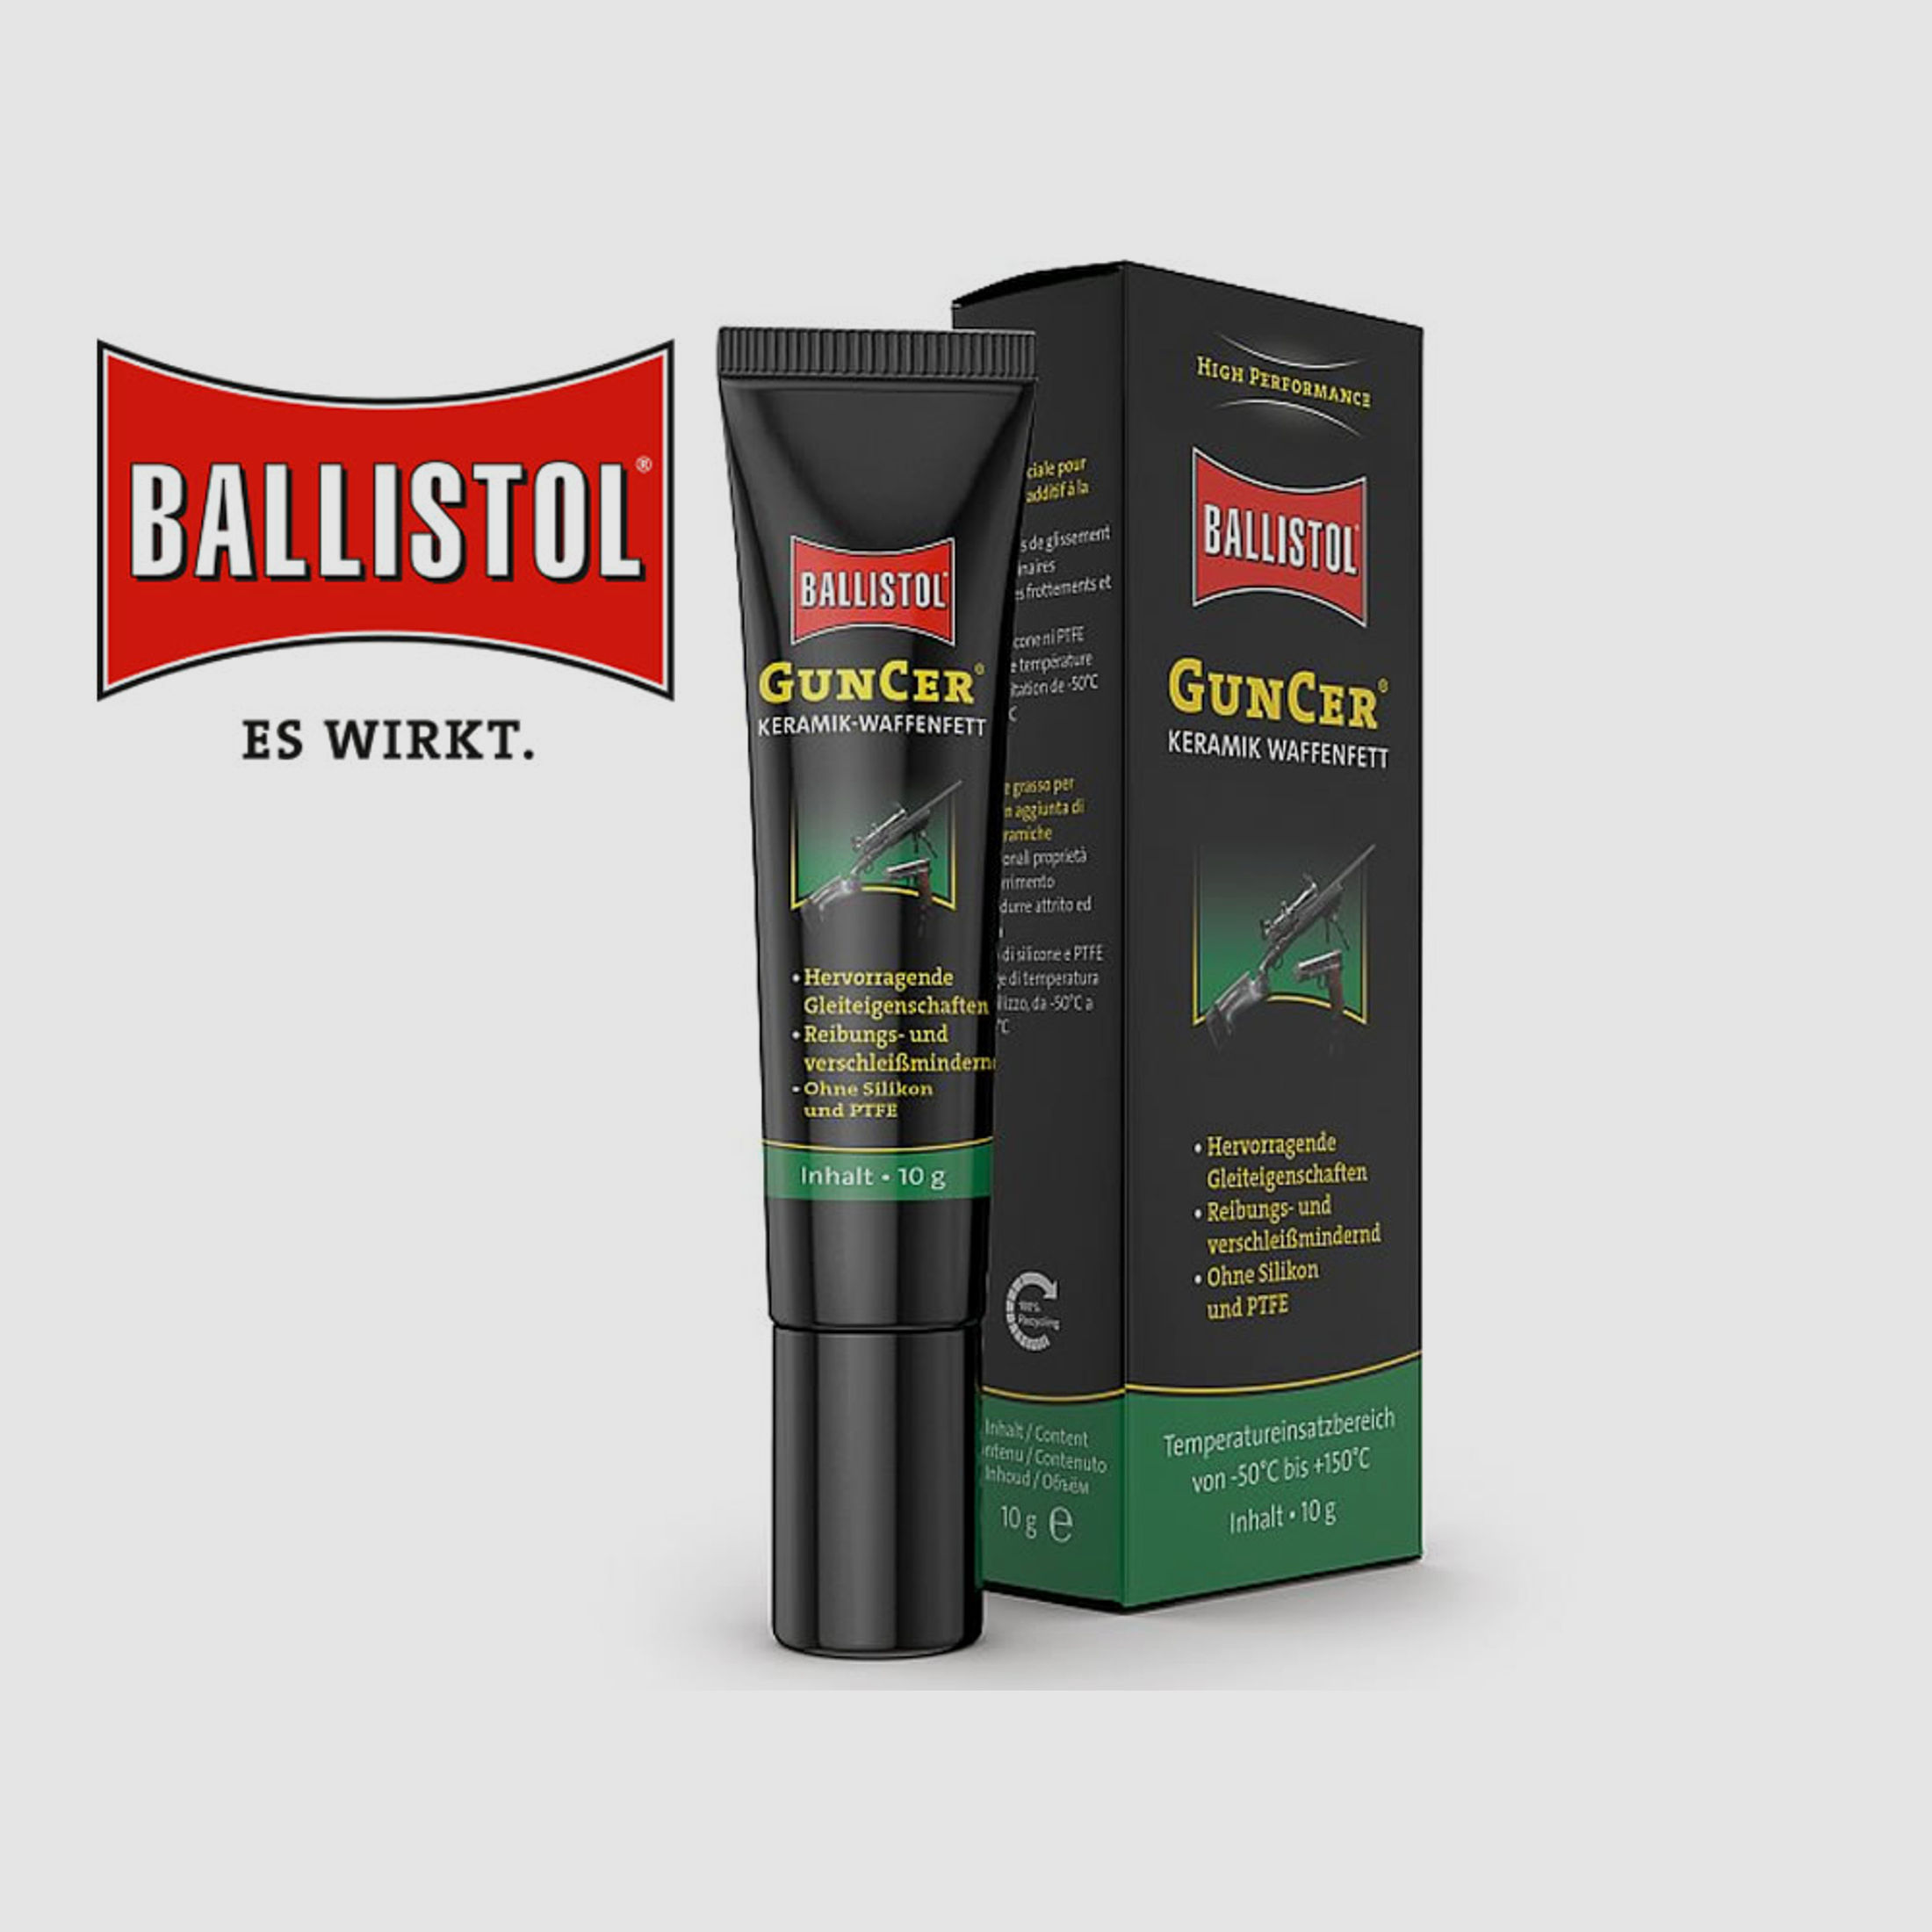 Ballistol Keramik Waffenfett GunCer, Korrosionsschutz, 10 g